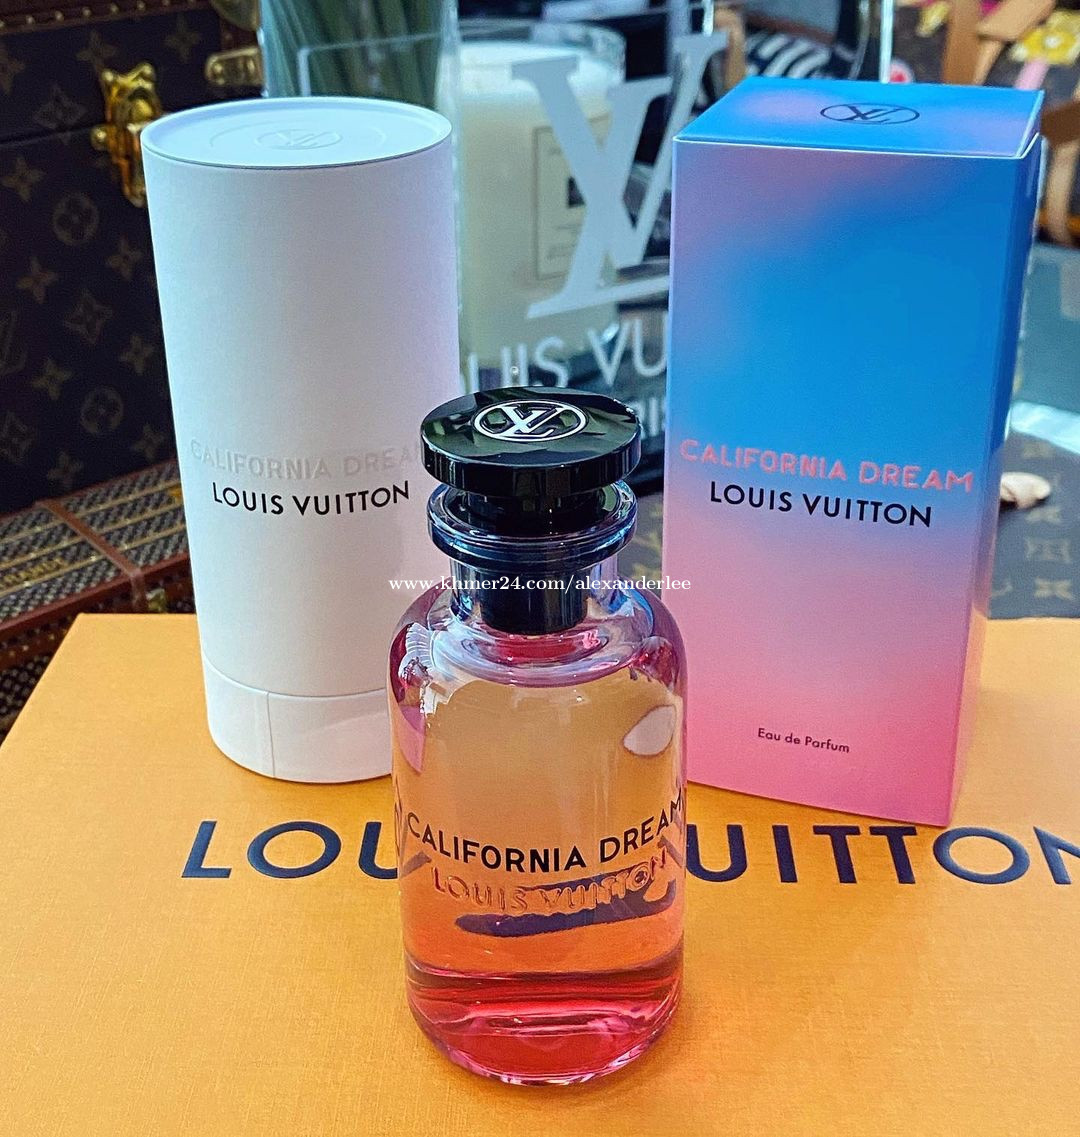 LOUIS VUITTON CALIFORNIA DREAM Eau De Parfum for Women & Men